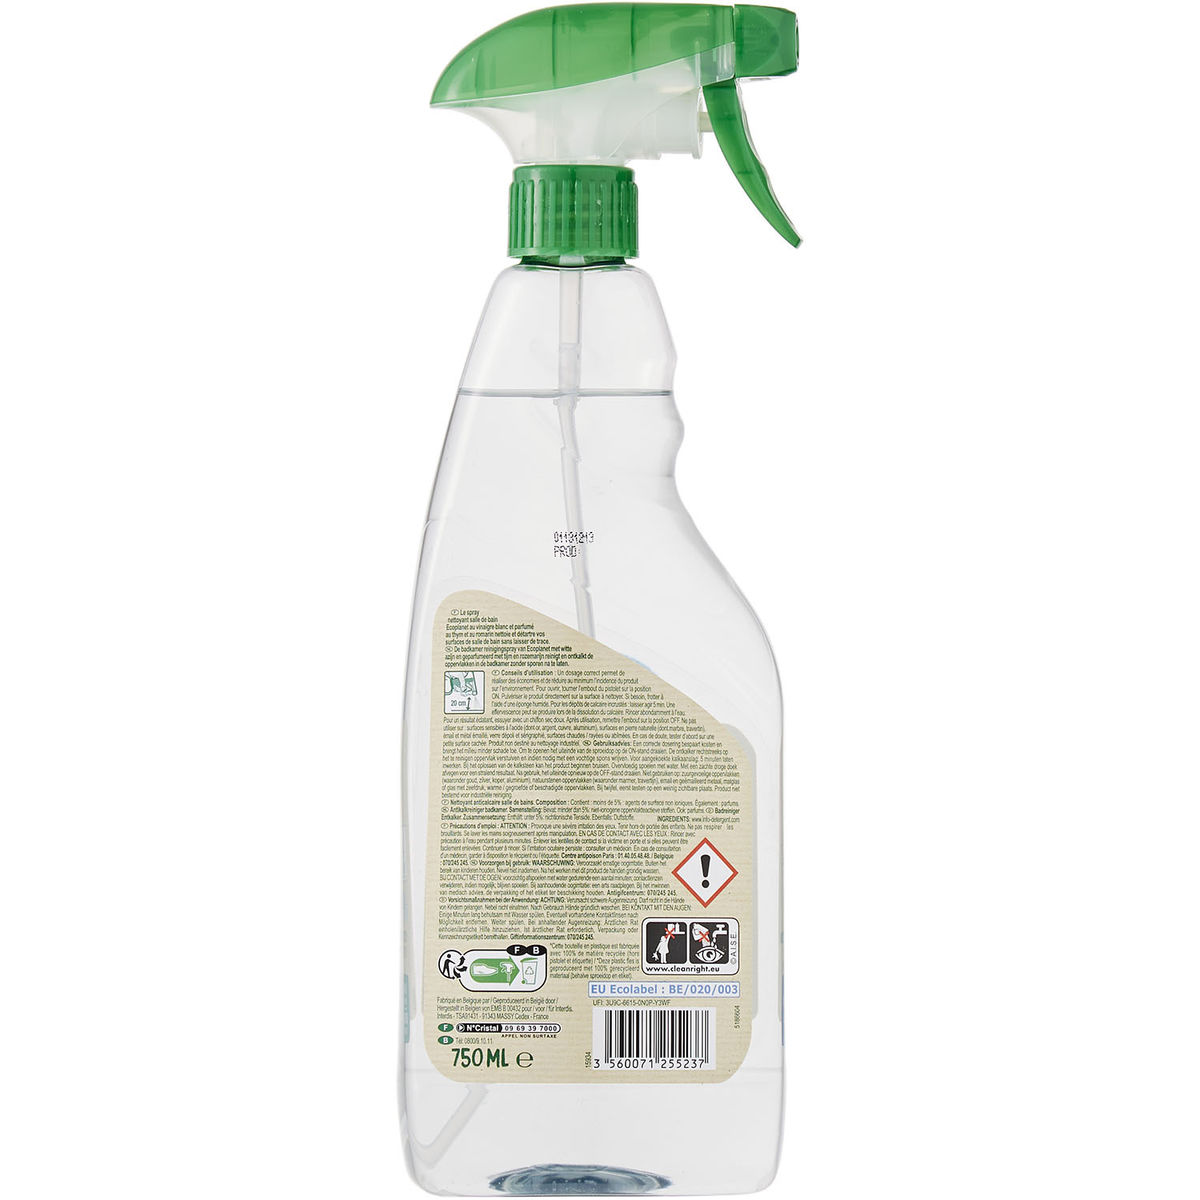 Carrefour Eco Planet Spray Nettoyant Salle de Bain 750 ml